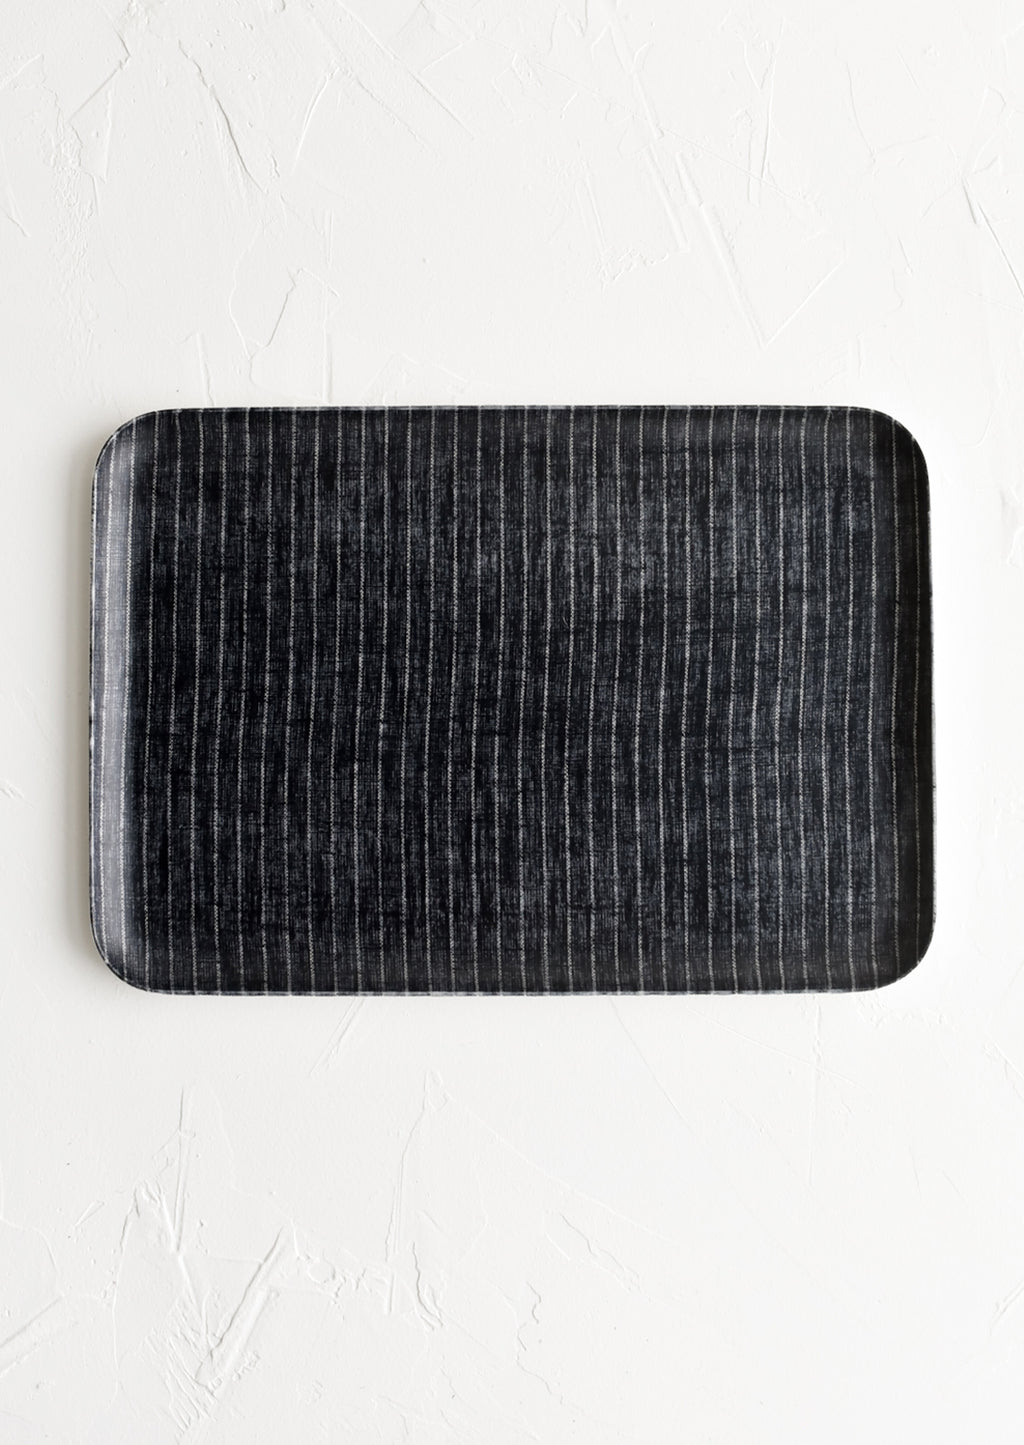 Medium / Navy Pinstripe: A small tray in charcoal pinstripe print.